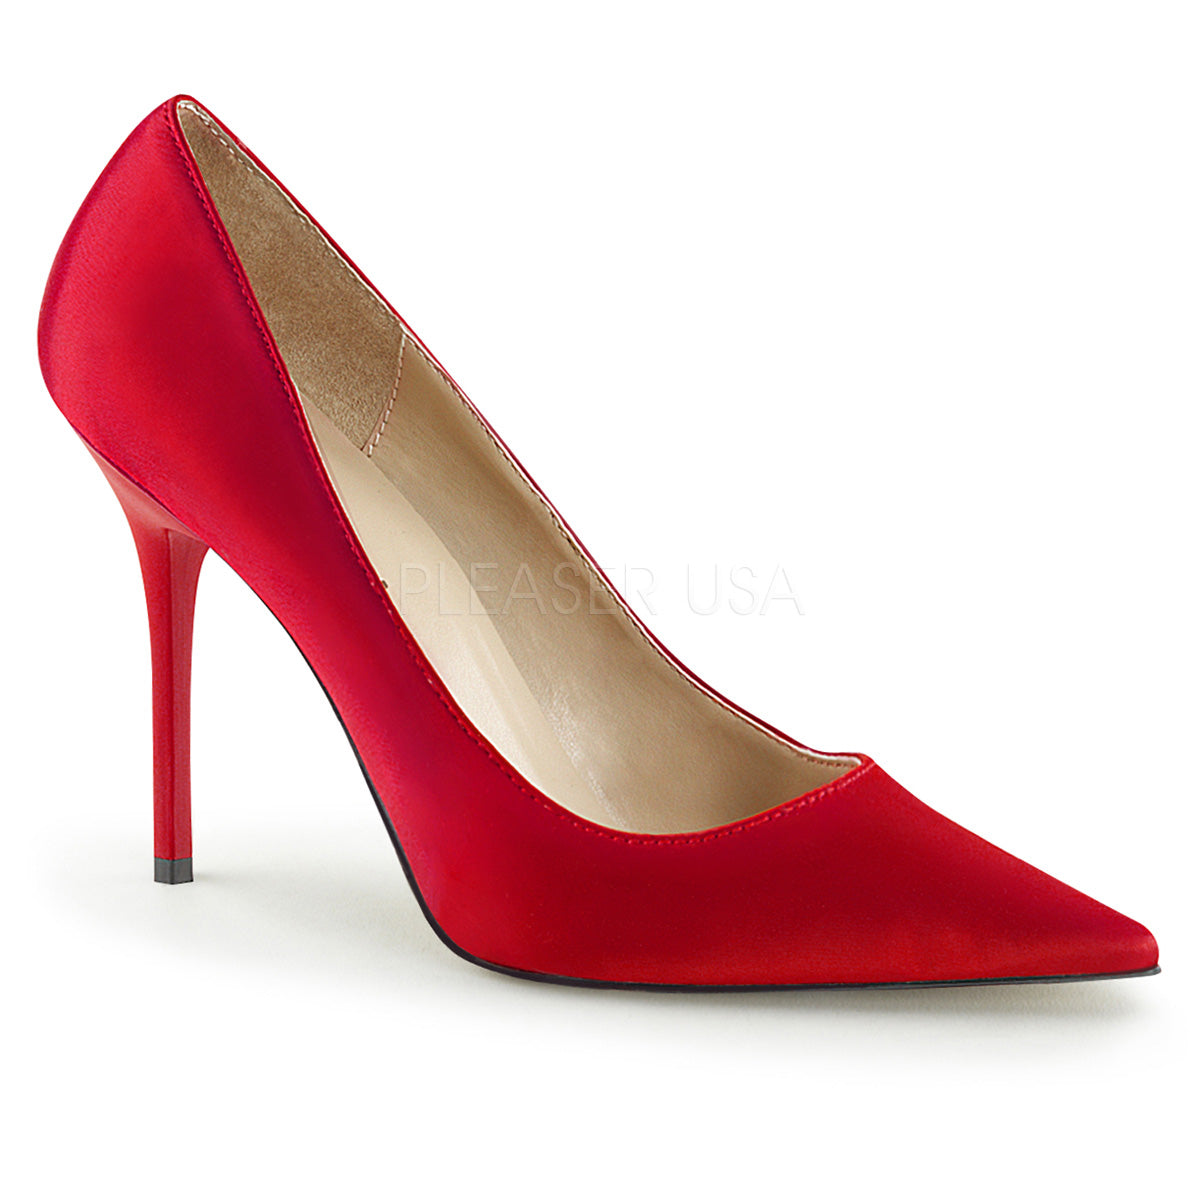 CLASSIQUE-20 Pleaser Red Satin High Heel Alternative Footwear Discontinued Sale Stock